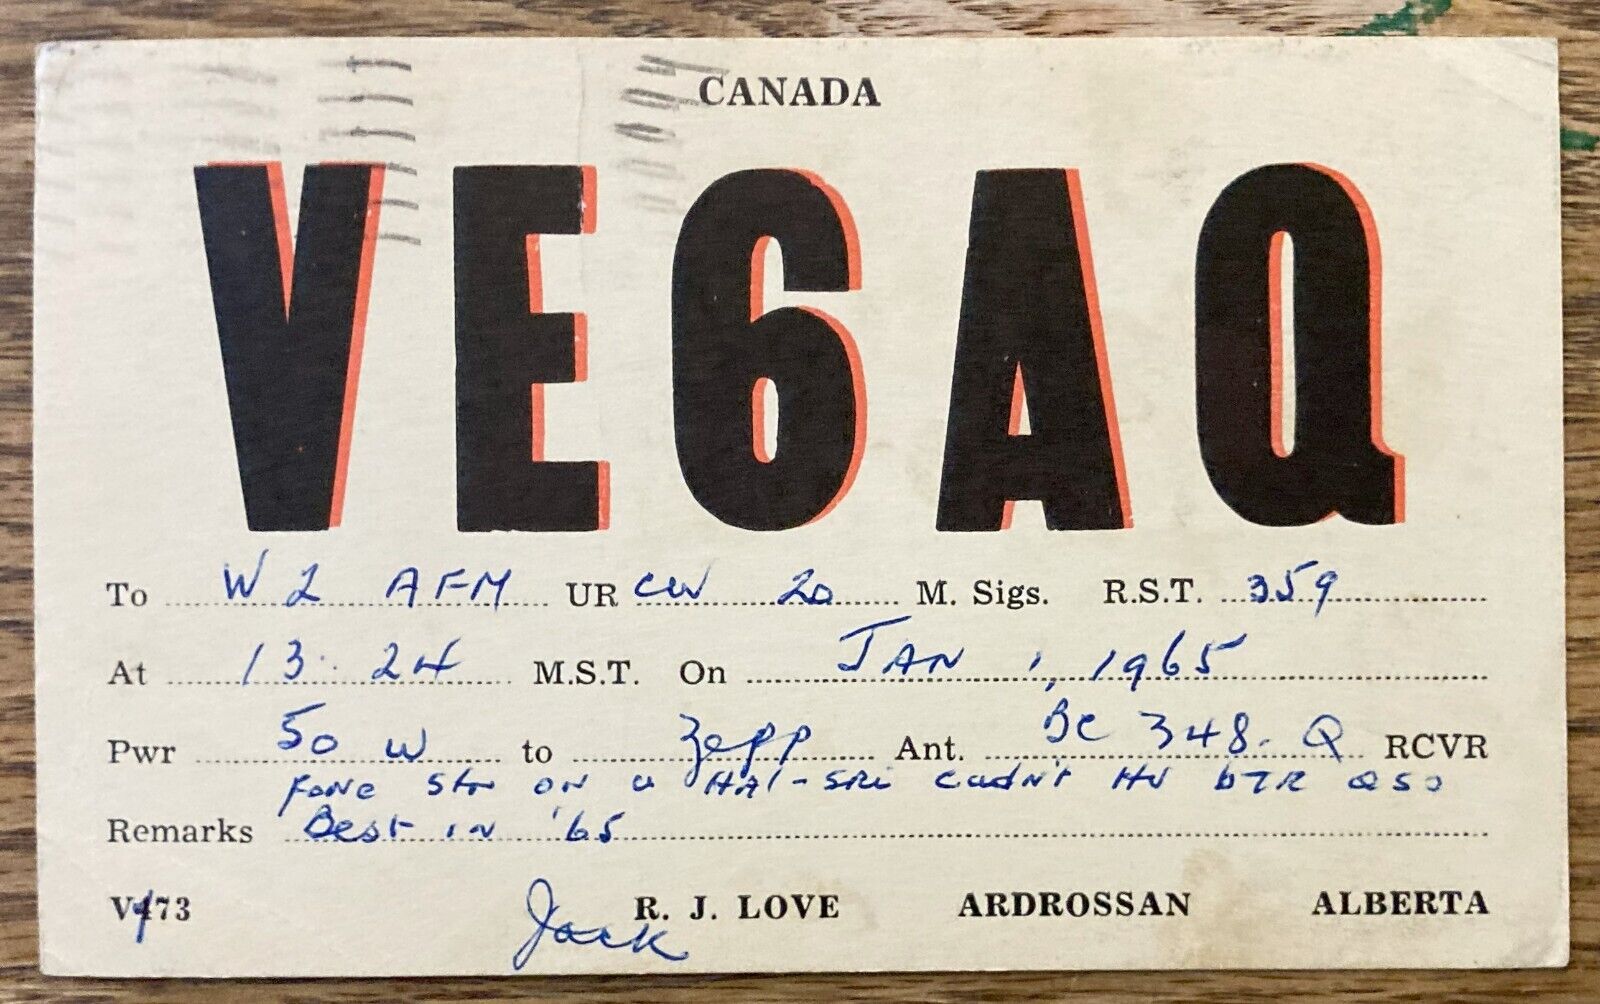 QSL Card - Alberta, Canada - Canadian Stamp - VE6AQ - 1965 - R.J. Love